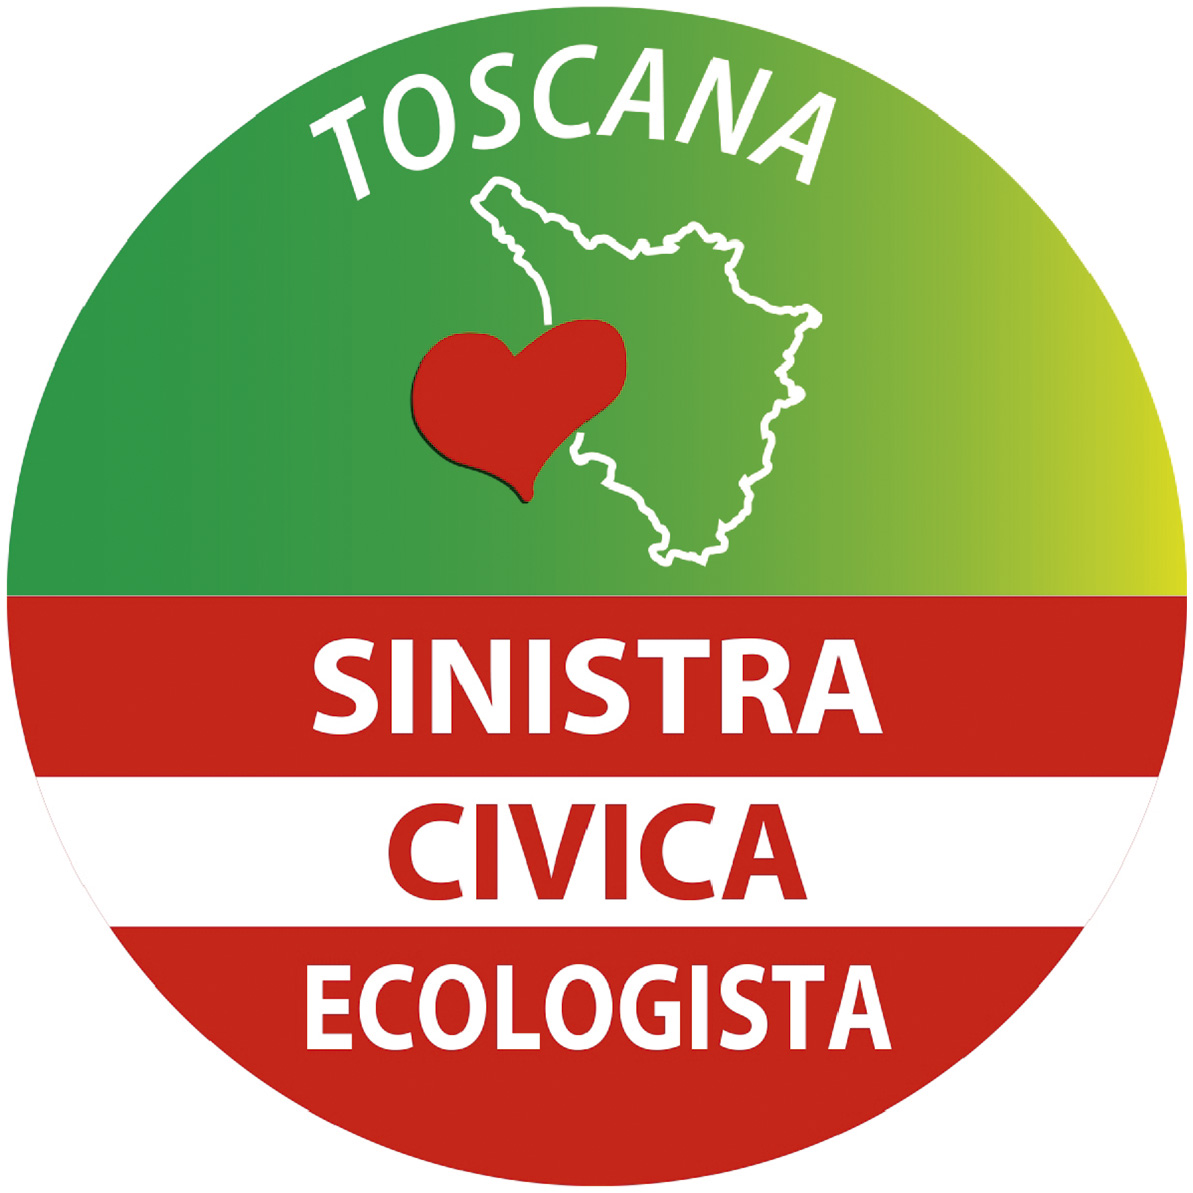 Sinistra Civica Ecologica